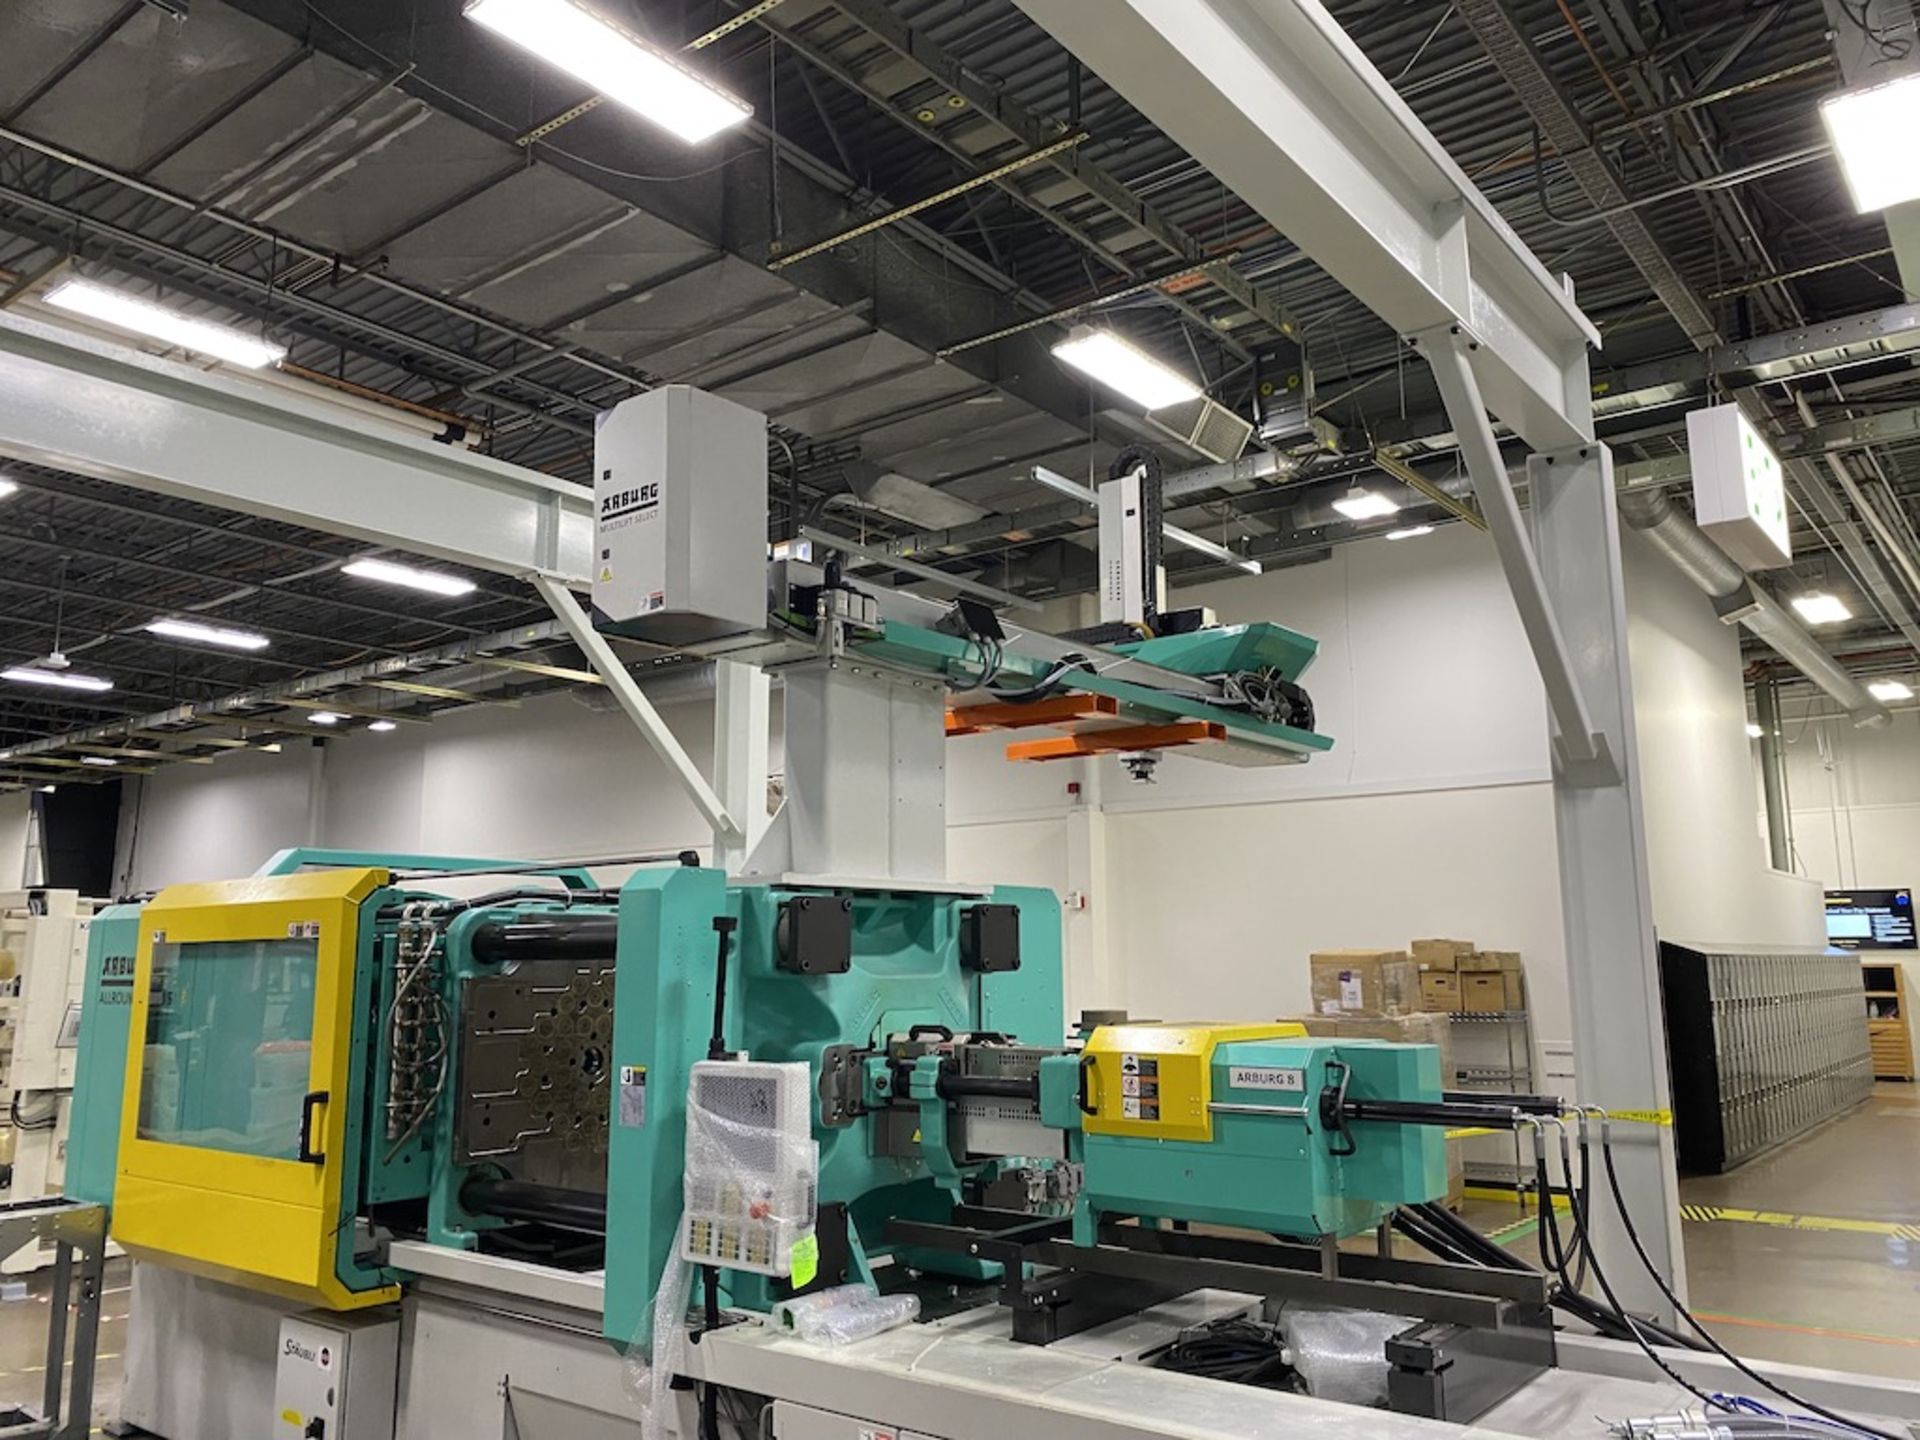 Arburg 320 Metric Ton Injection Molding Press w/Arburg Robot, New in 2015 - Bild 4 aus 8